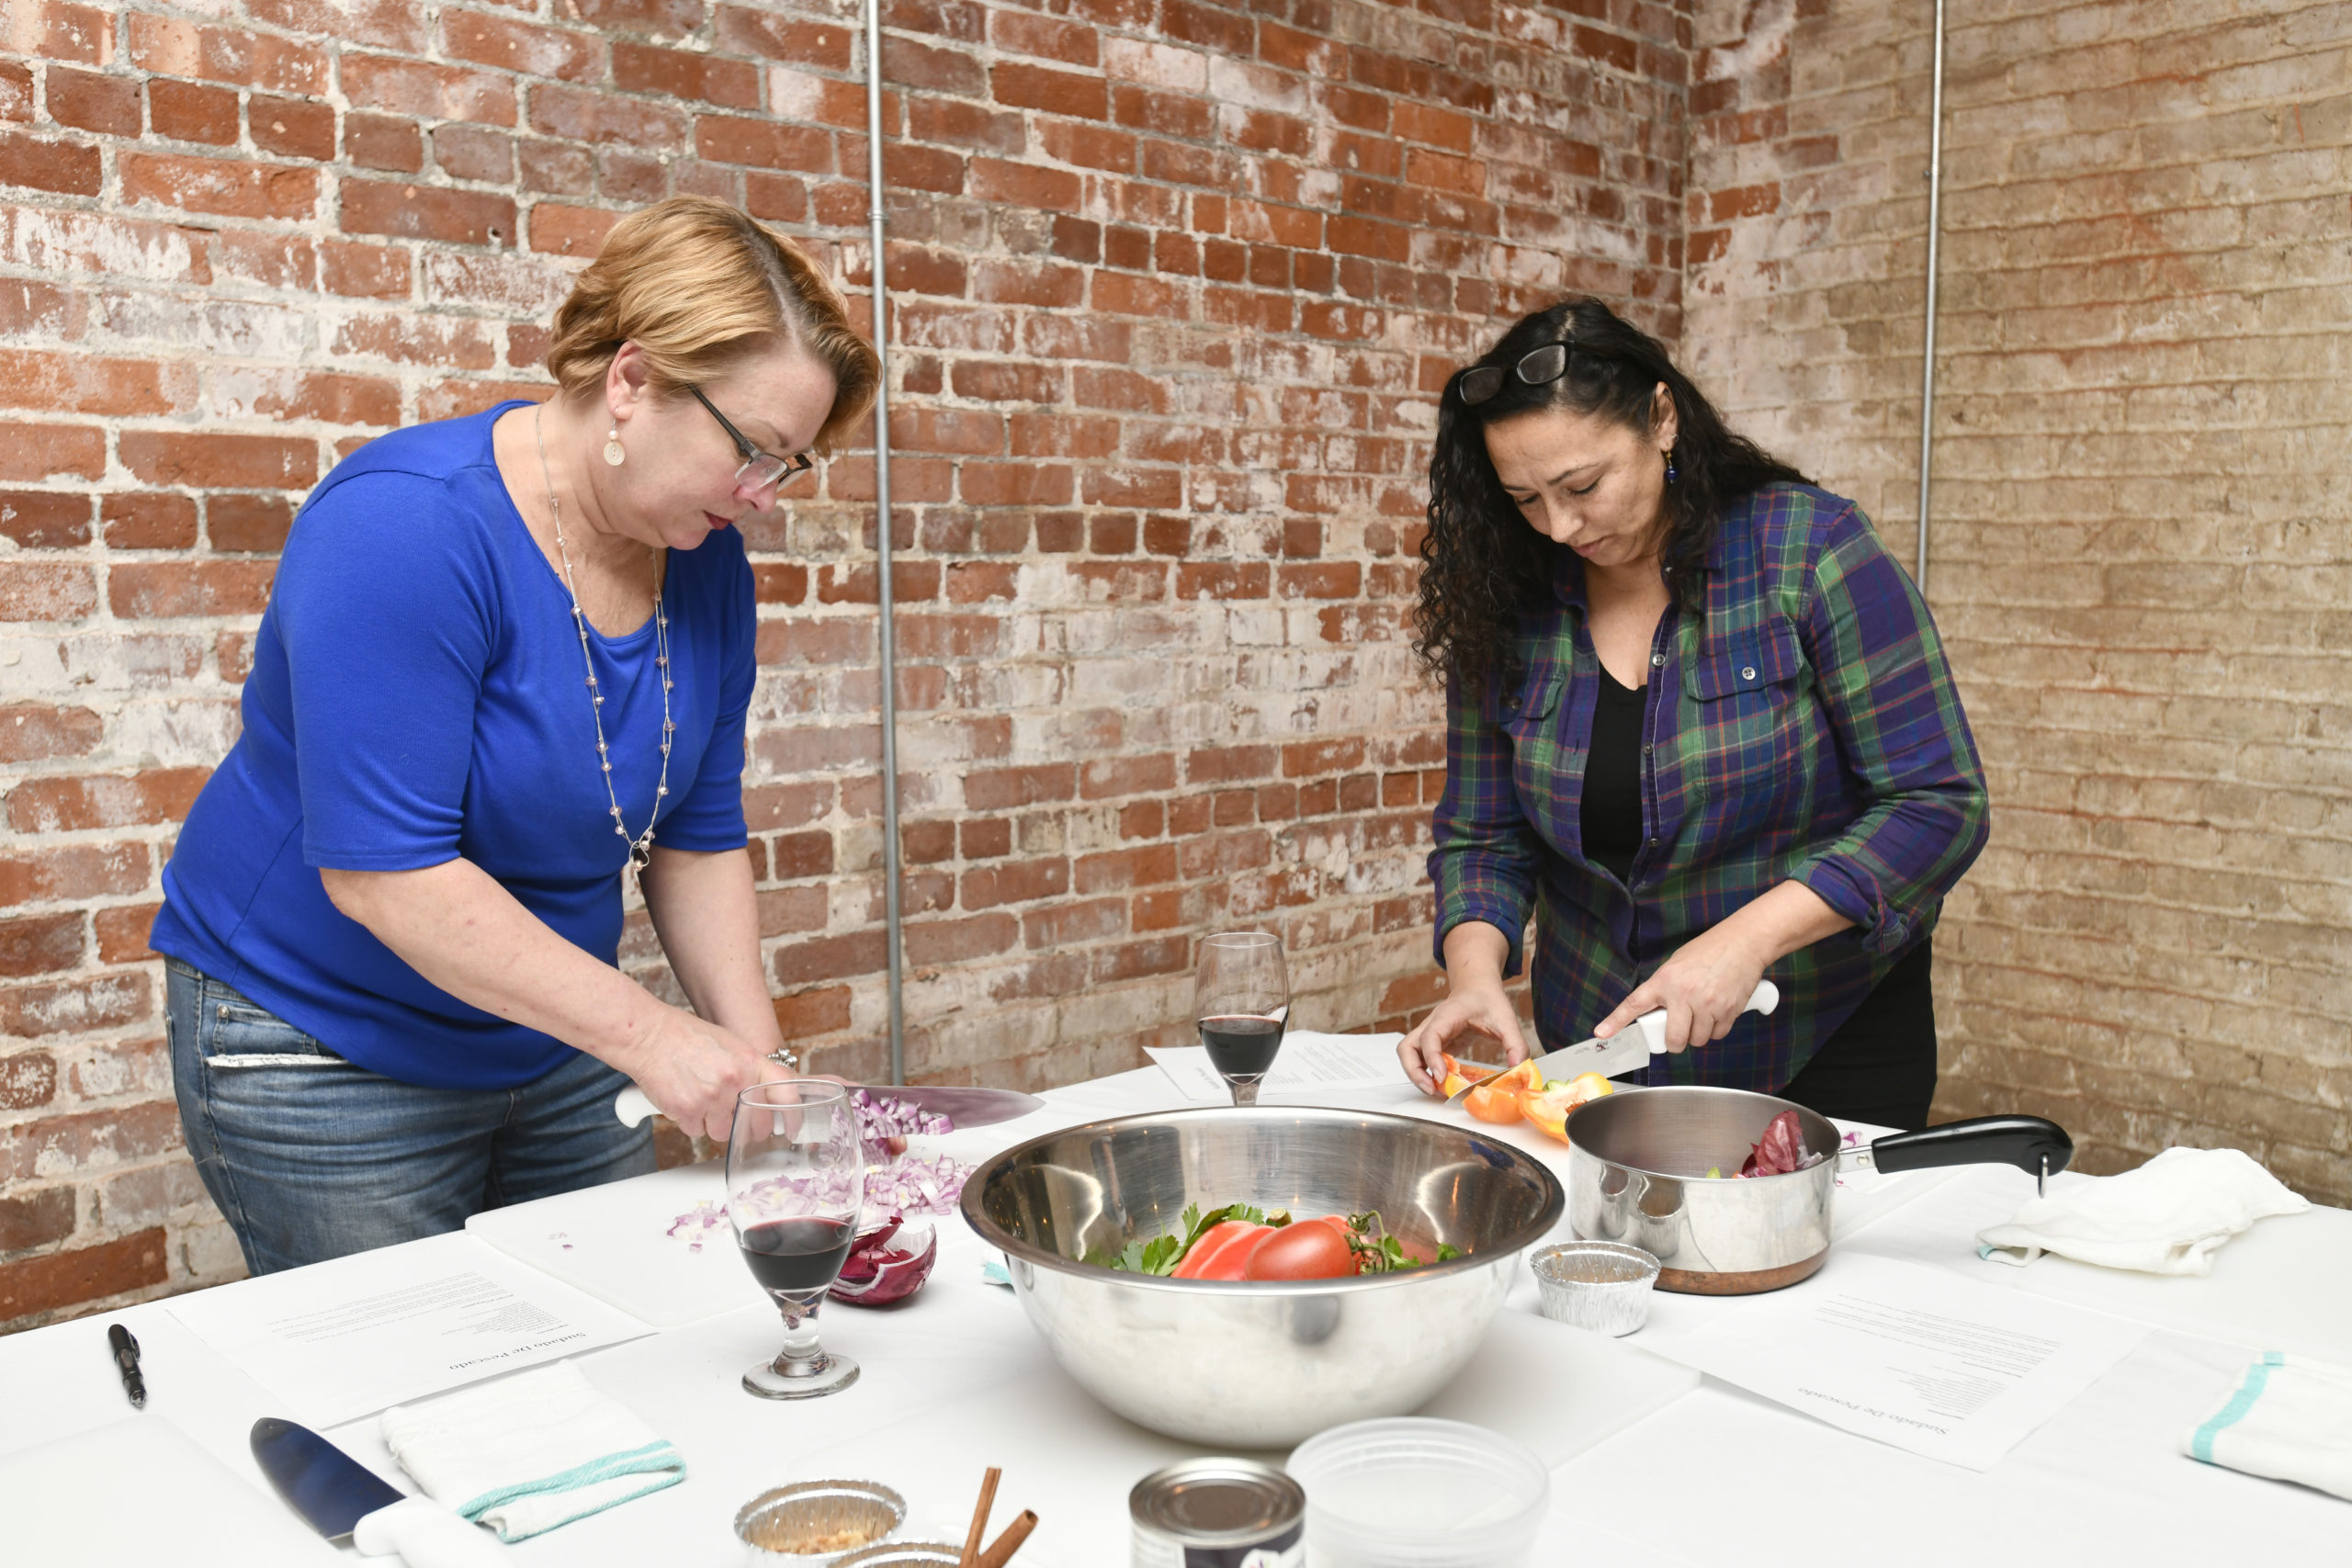 Students Lisa Westfall and Marilyn Cruz chop vegetables.